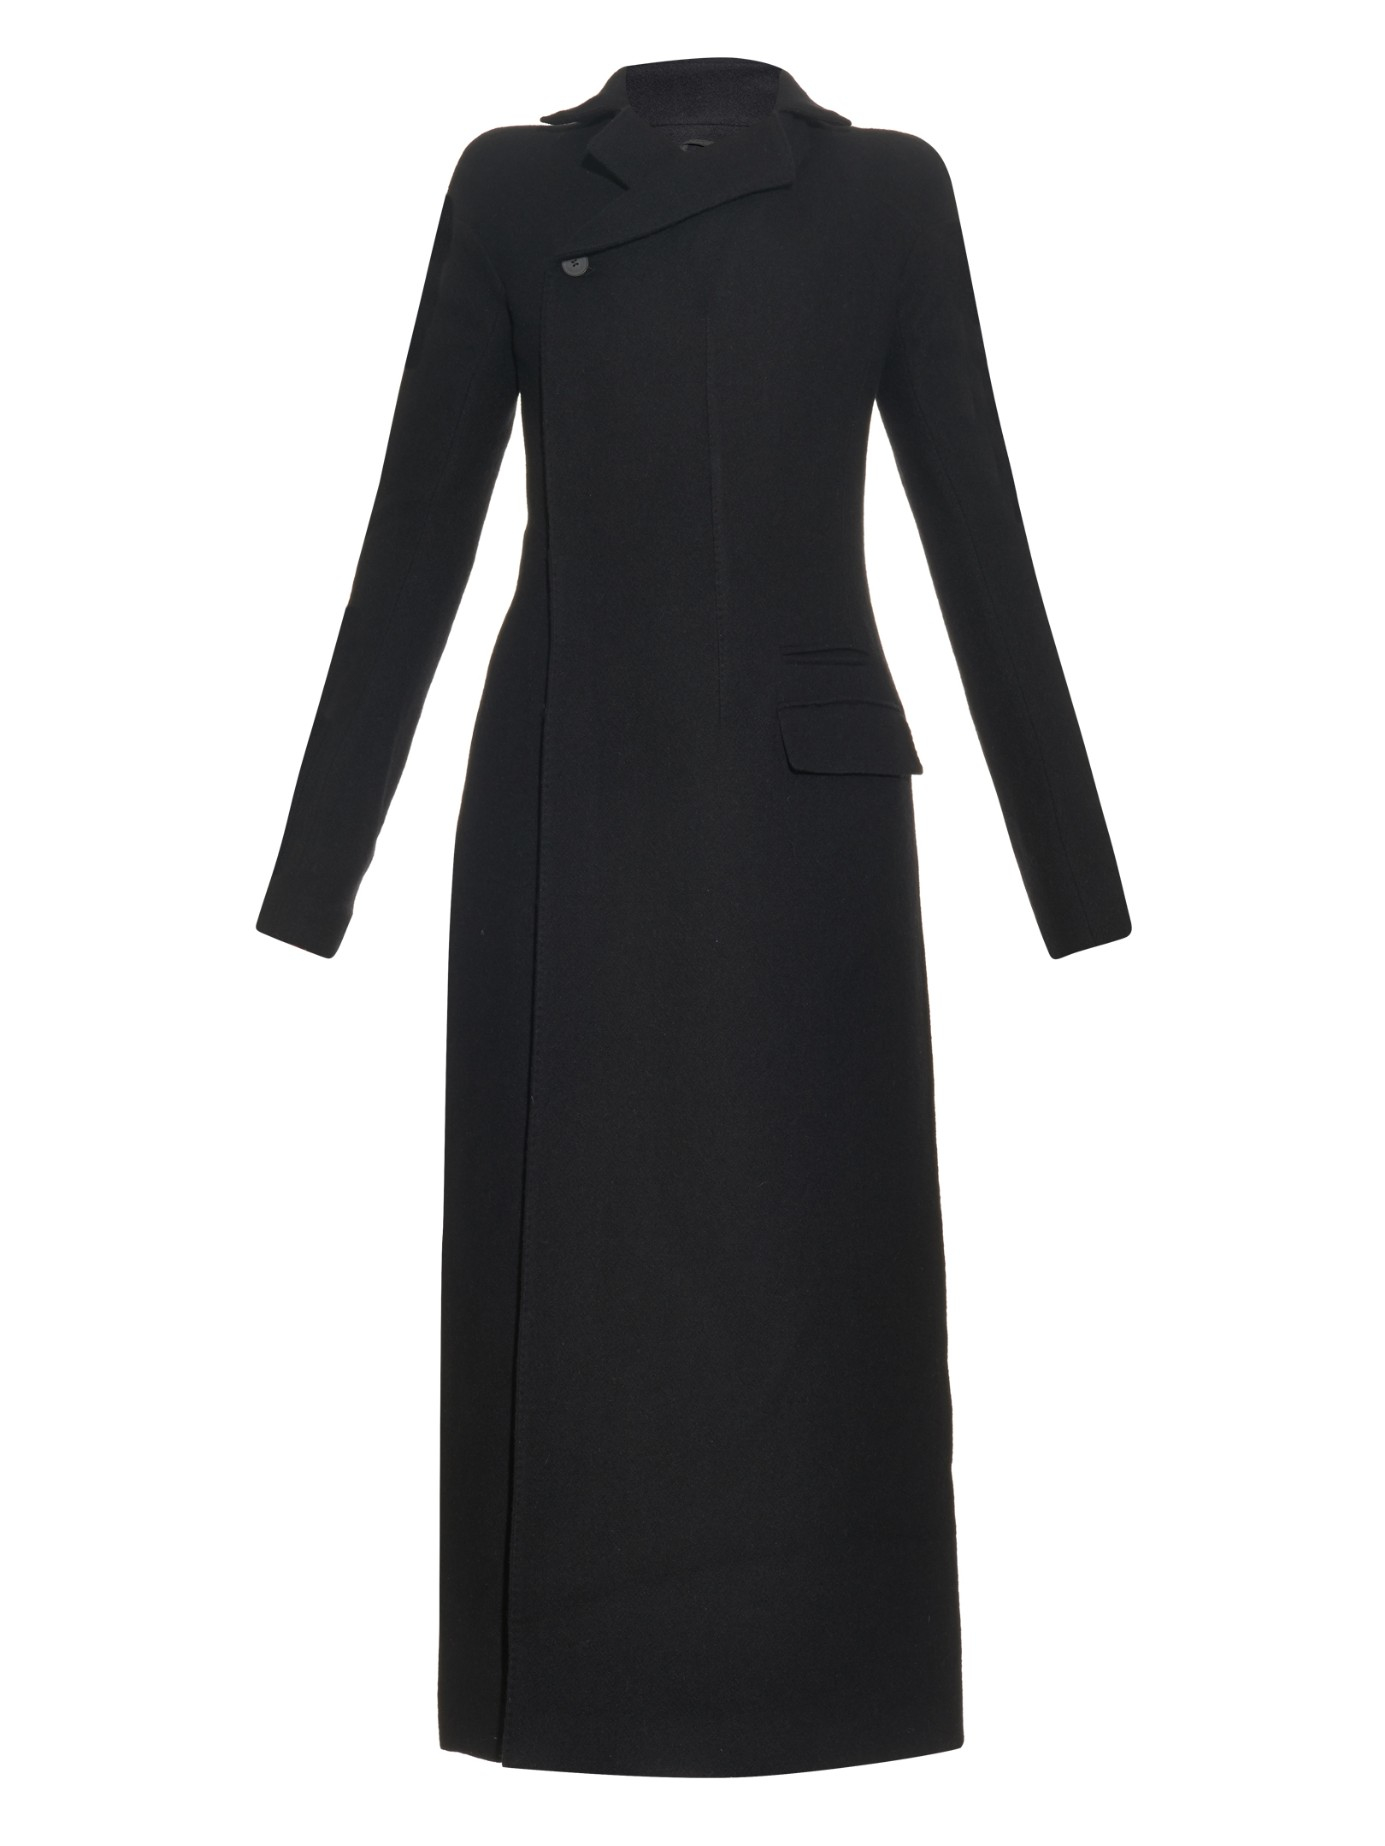 Haider Ackermann Wool-blend Coat in Black | Lyst